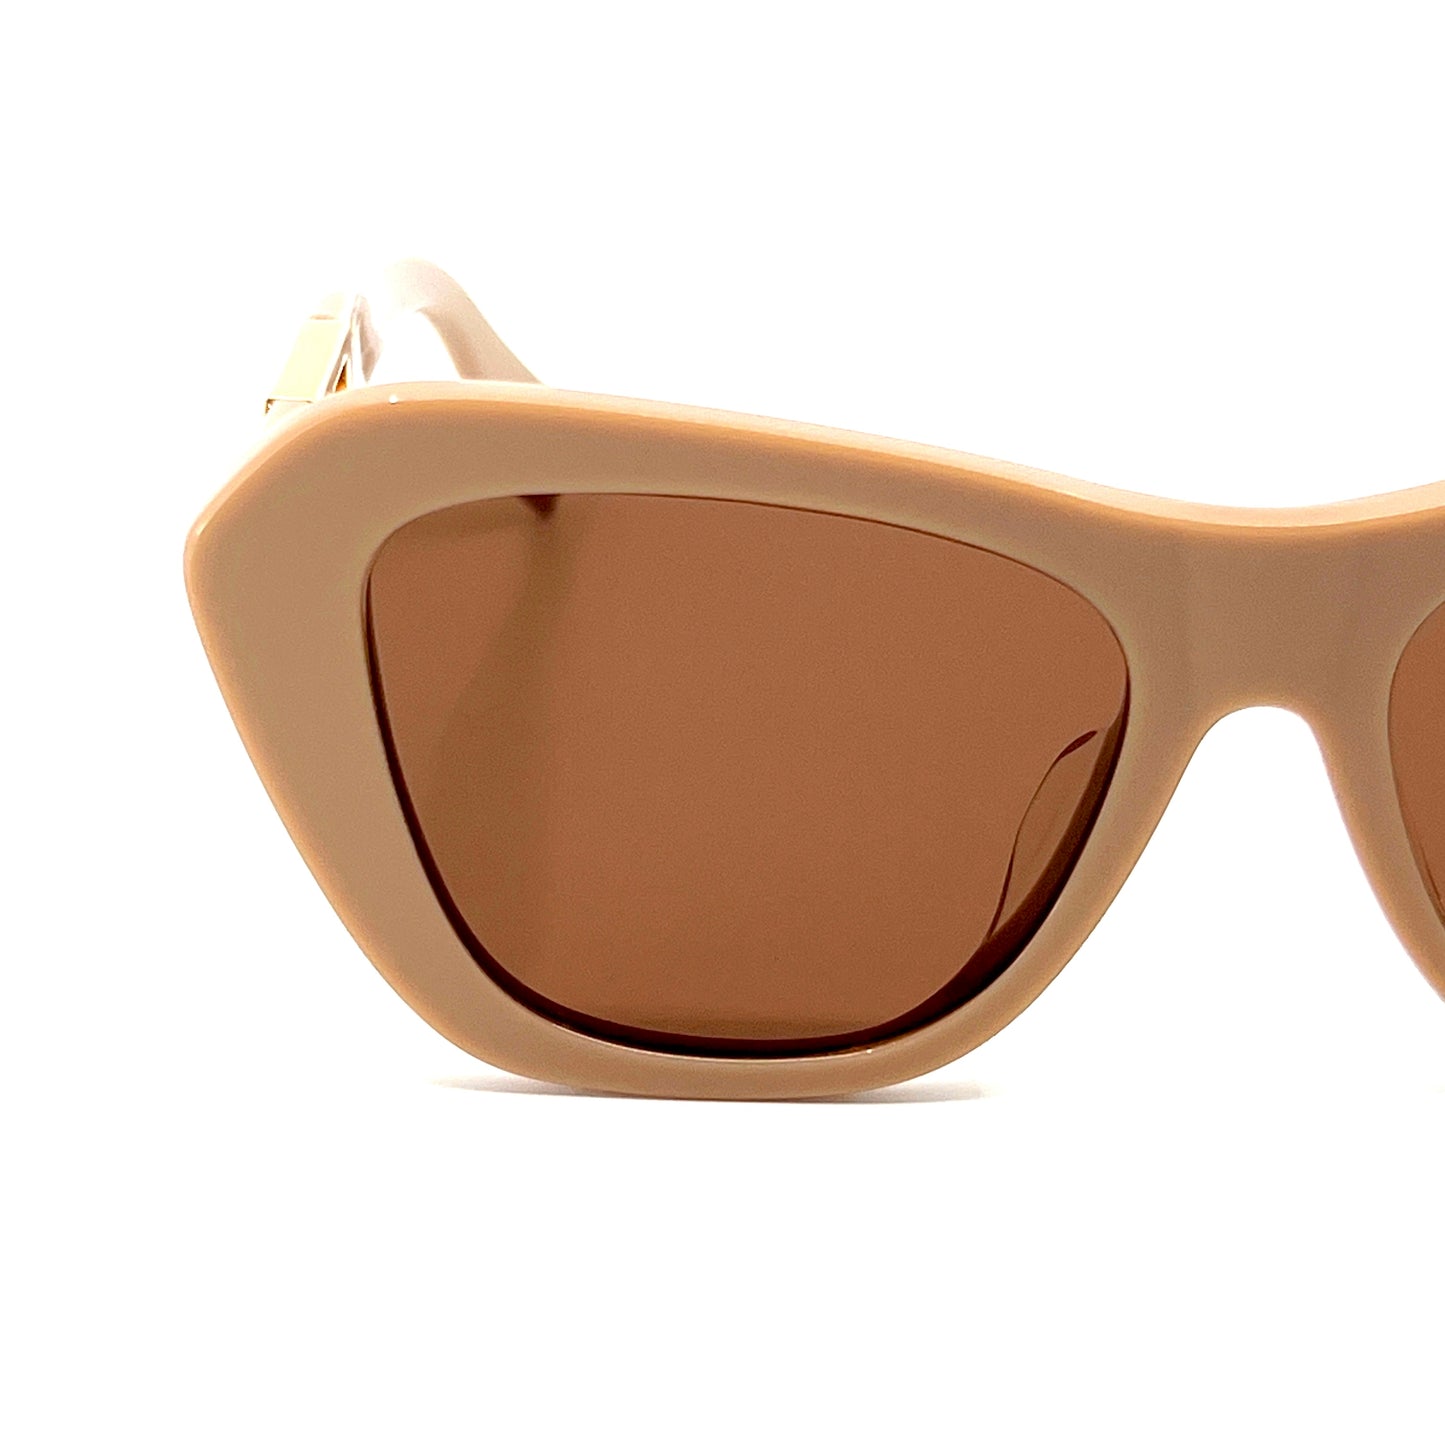 FENDI Sunglasses FE40064F 57E